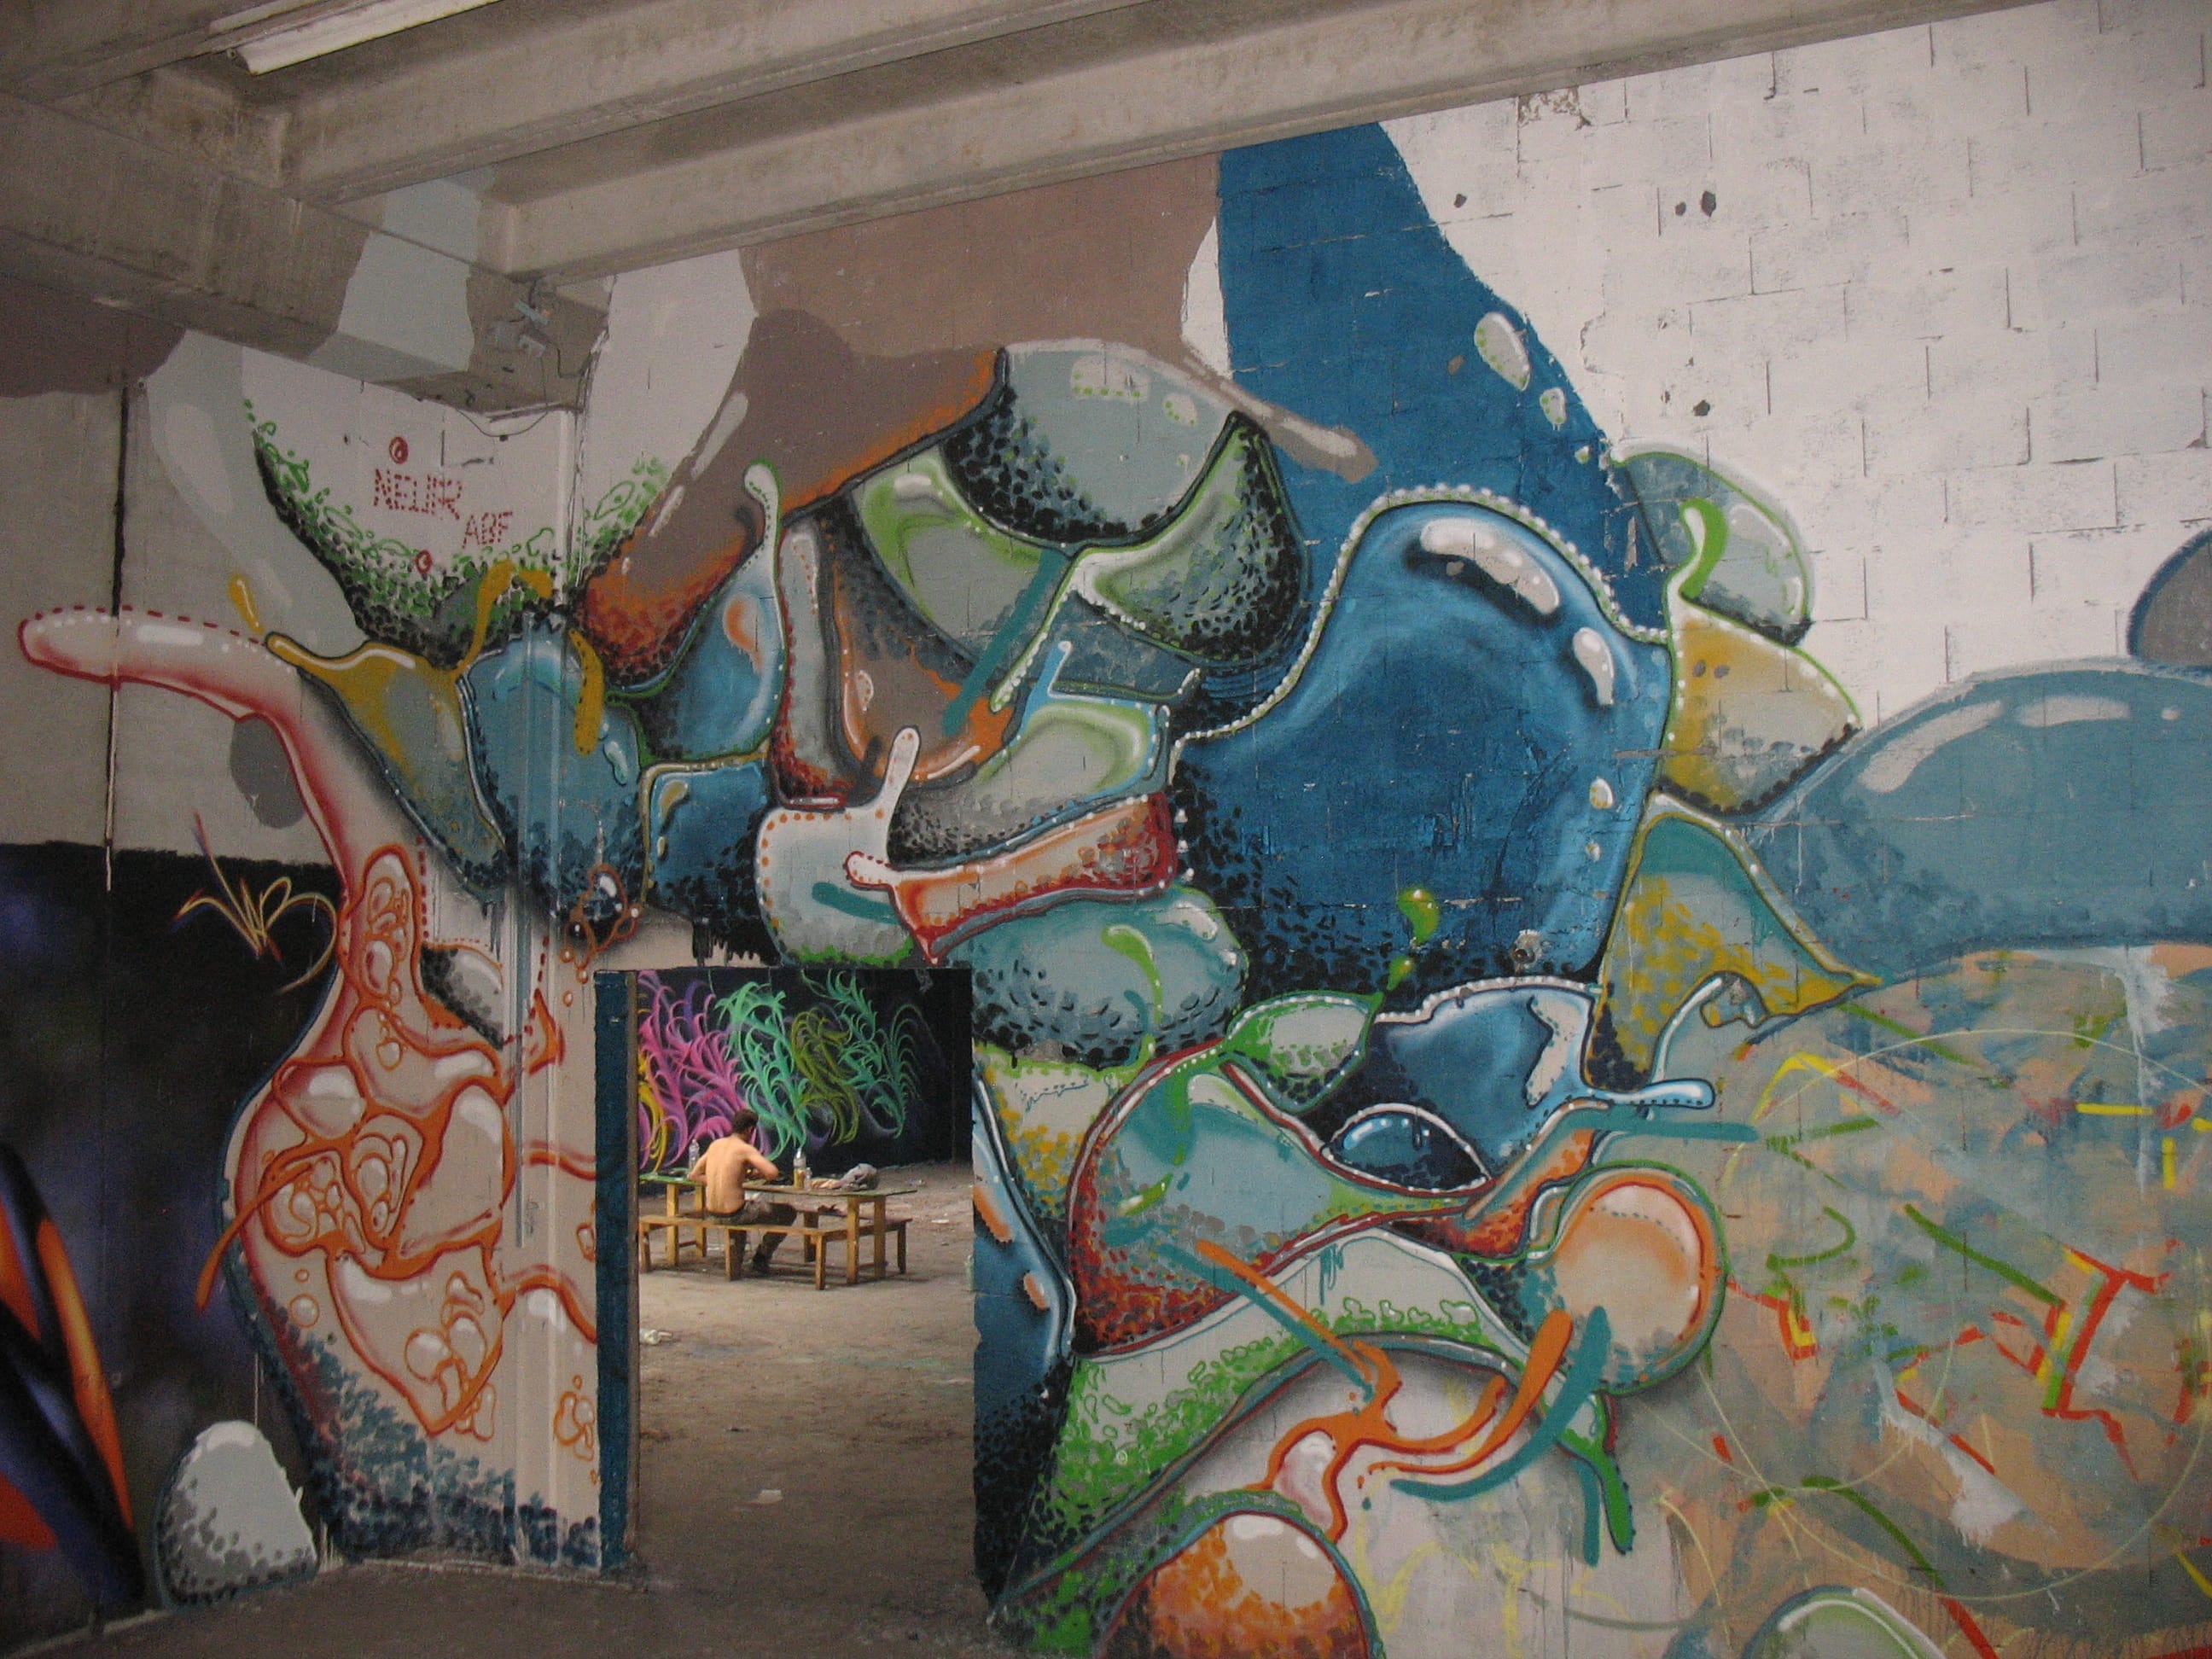 Graffiti 5659 #neurabf captured by Neur Abf in Trélissac France